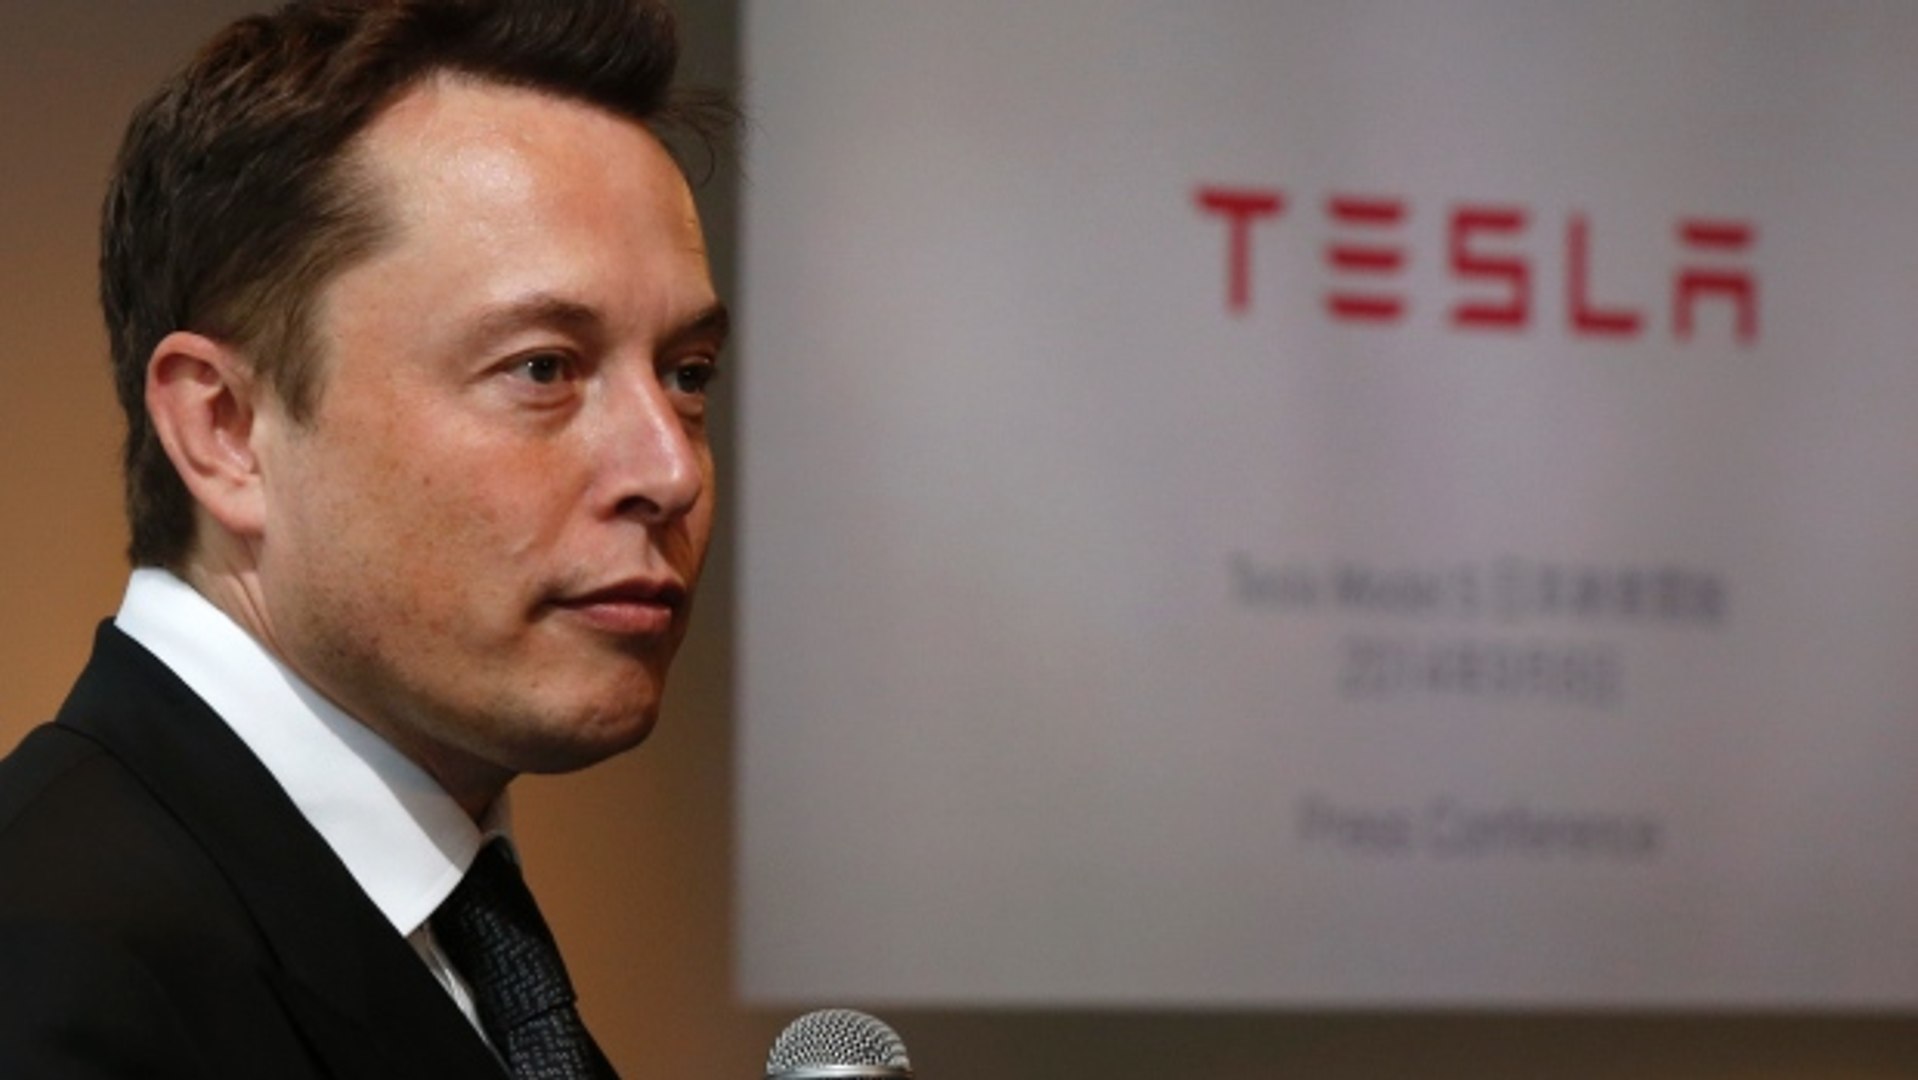 Elon Musk at Tesla Shareholders Meeting 2016